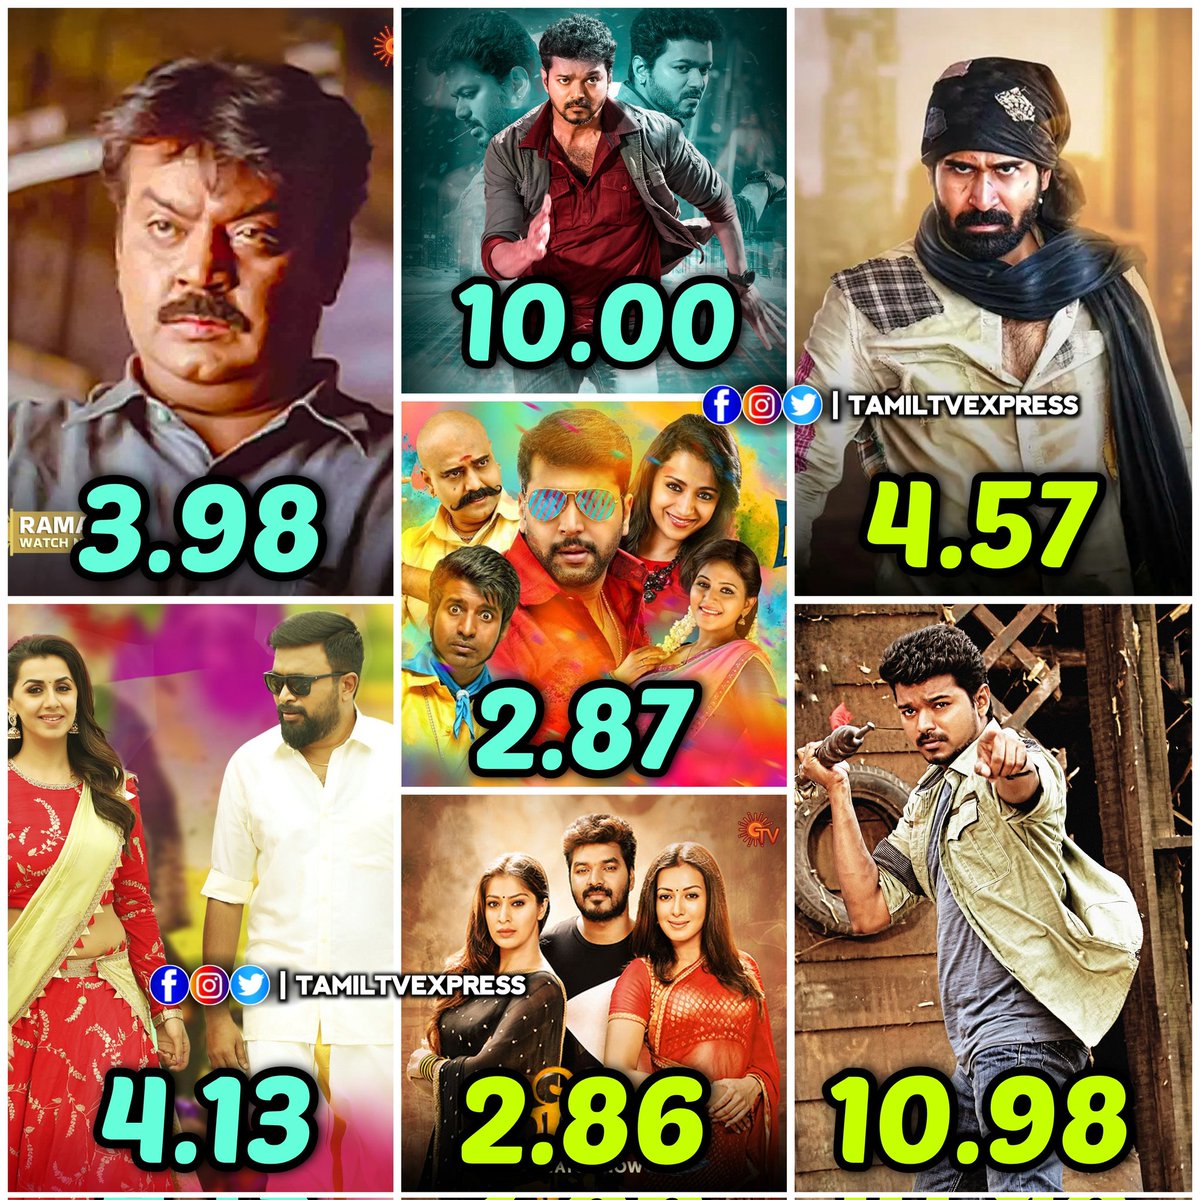 #SunTV Sunday Movies TRP Ratings In U+R Markets 

Week 1
#Ramana - 3.98
#Raajavamsam - 4.13
#Sarkar - 10
#SakalakalaVallavan - 2.87

Week 2
#Neeya2 - 2.86
#Pichaikkaran - 4.57
#Jilla - 10.98 

#CaptainVijayakanth #Sasikumar #ThalapathyVijay #JayamRavi #VijayAntony #Jai